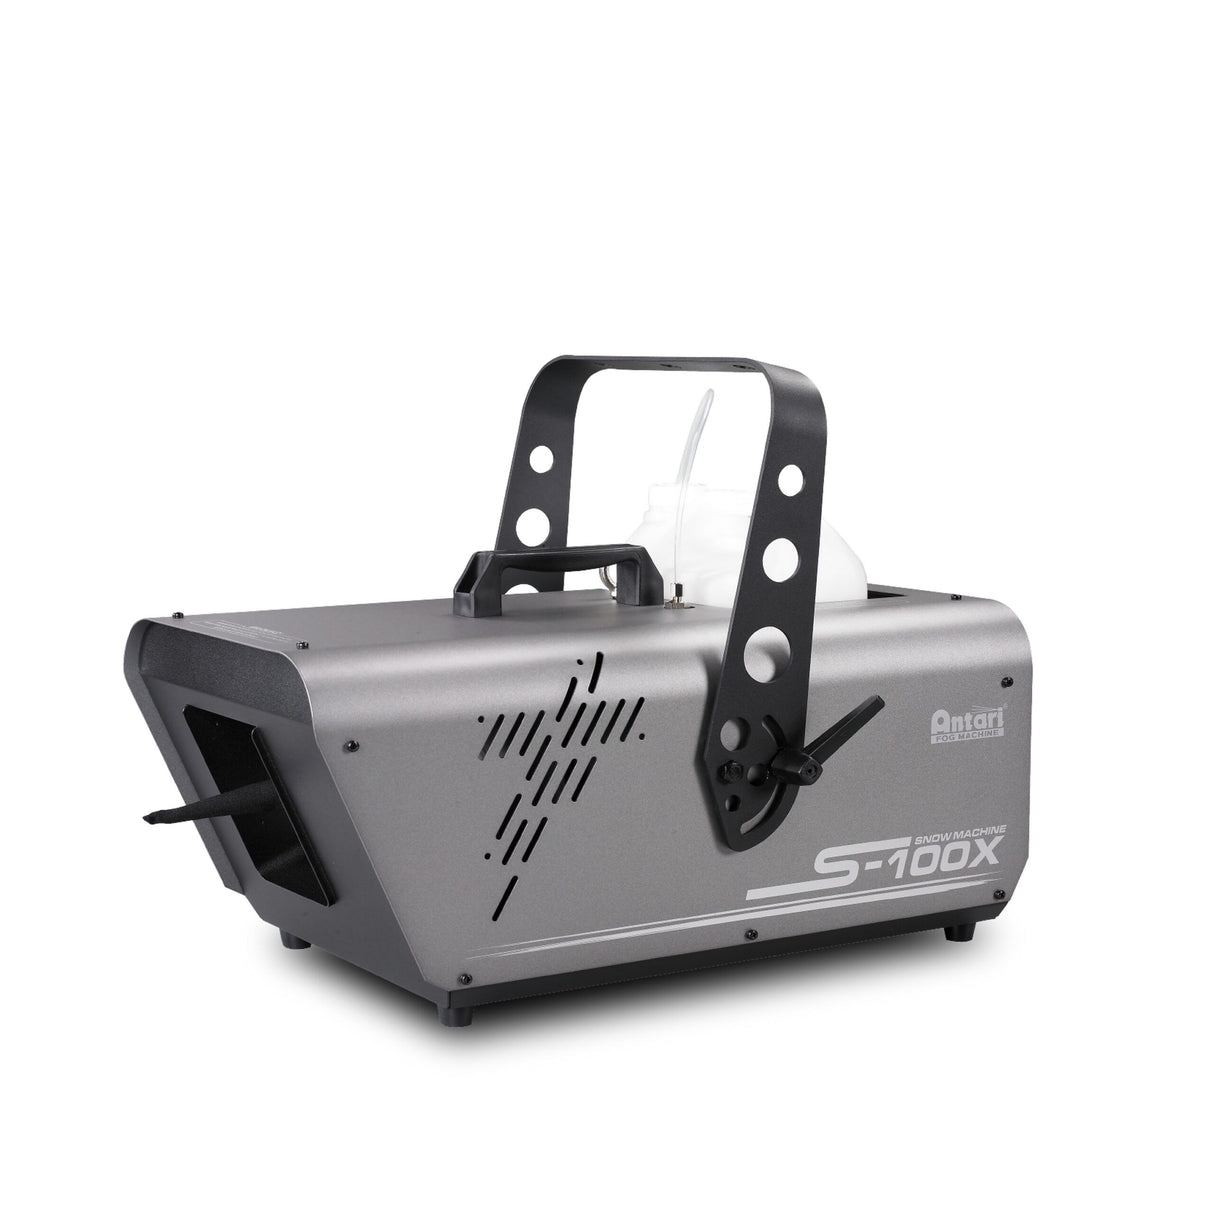 Antari S-100X Snow Effects Machine with 1.32 Gallon Capacity